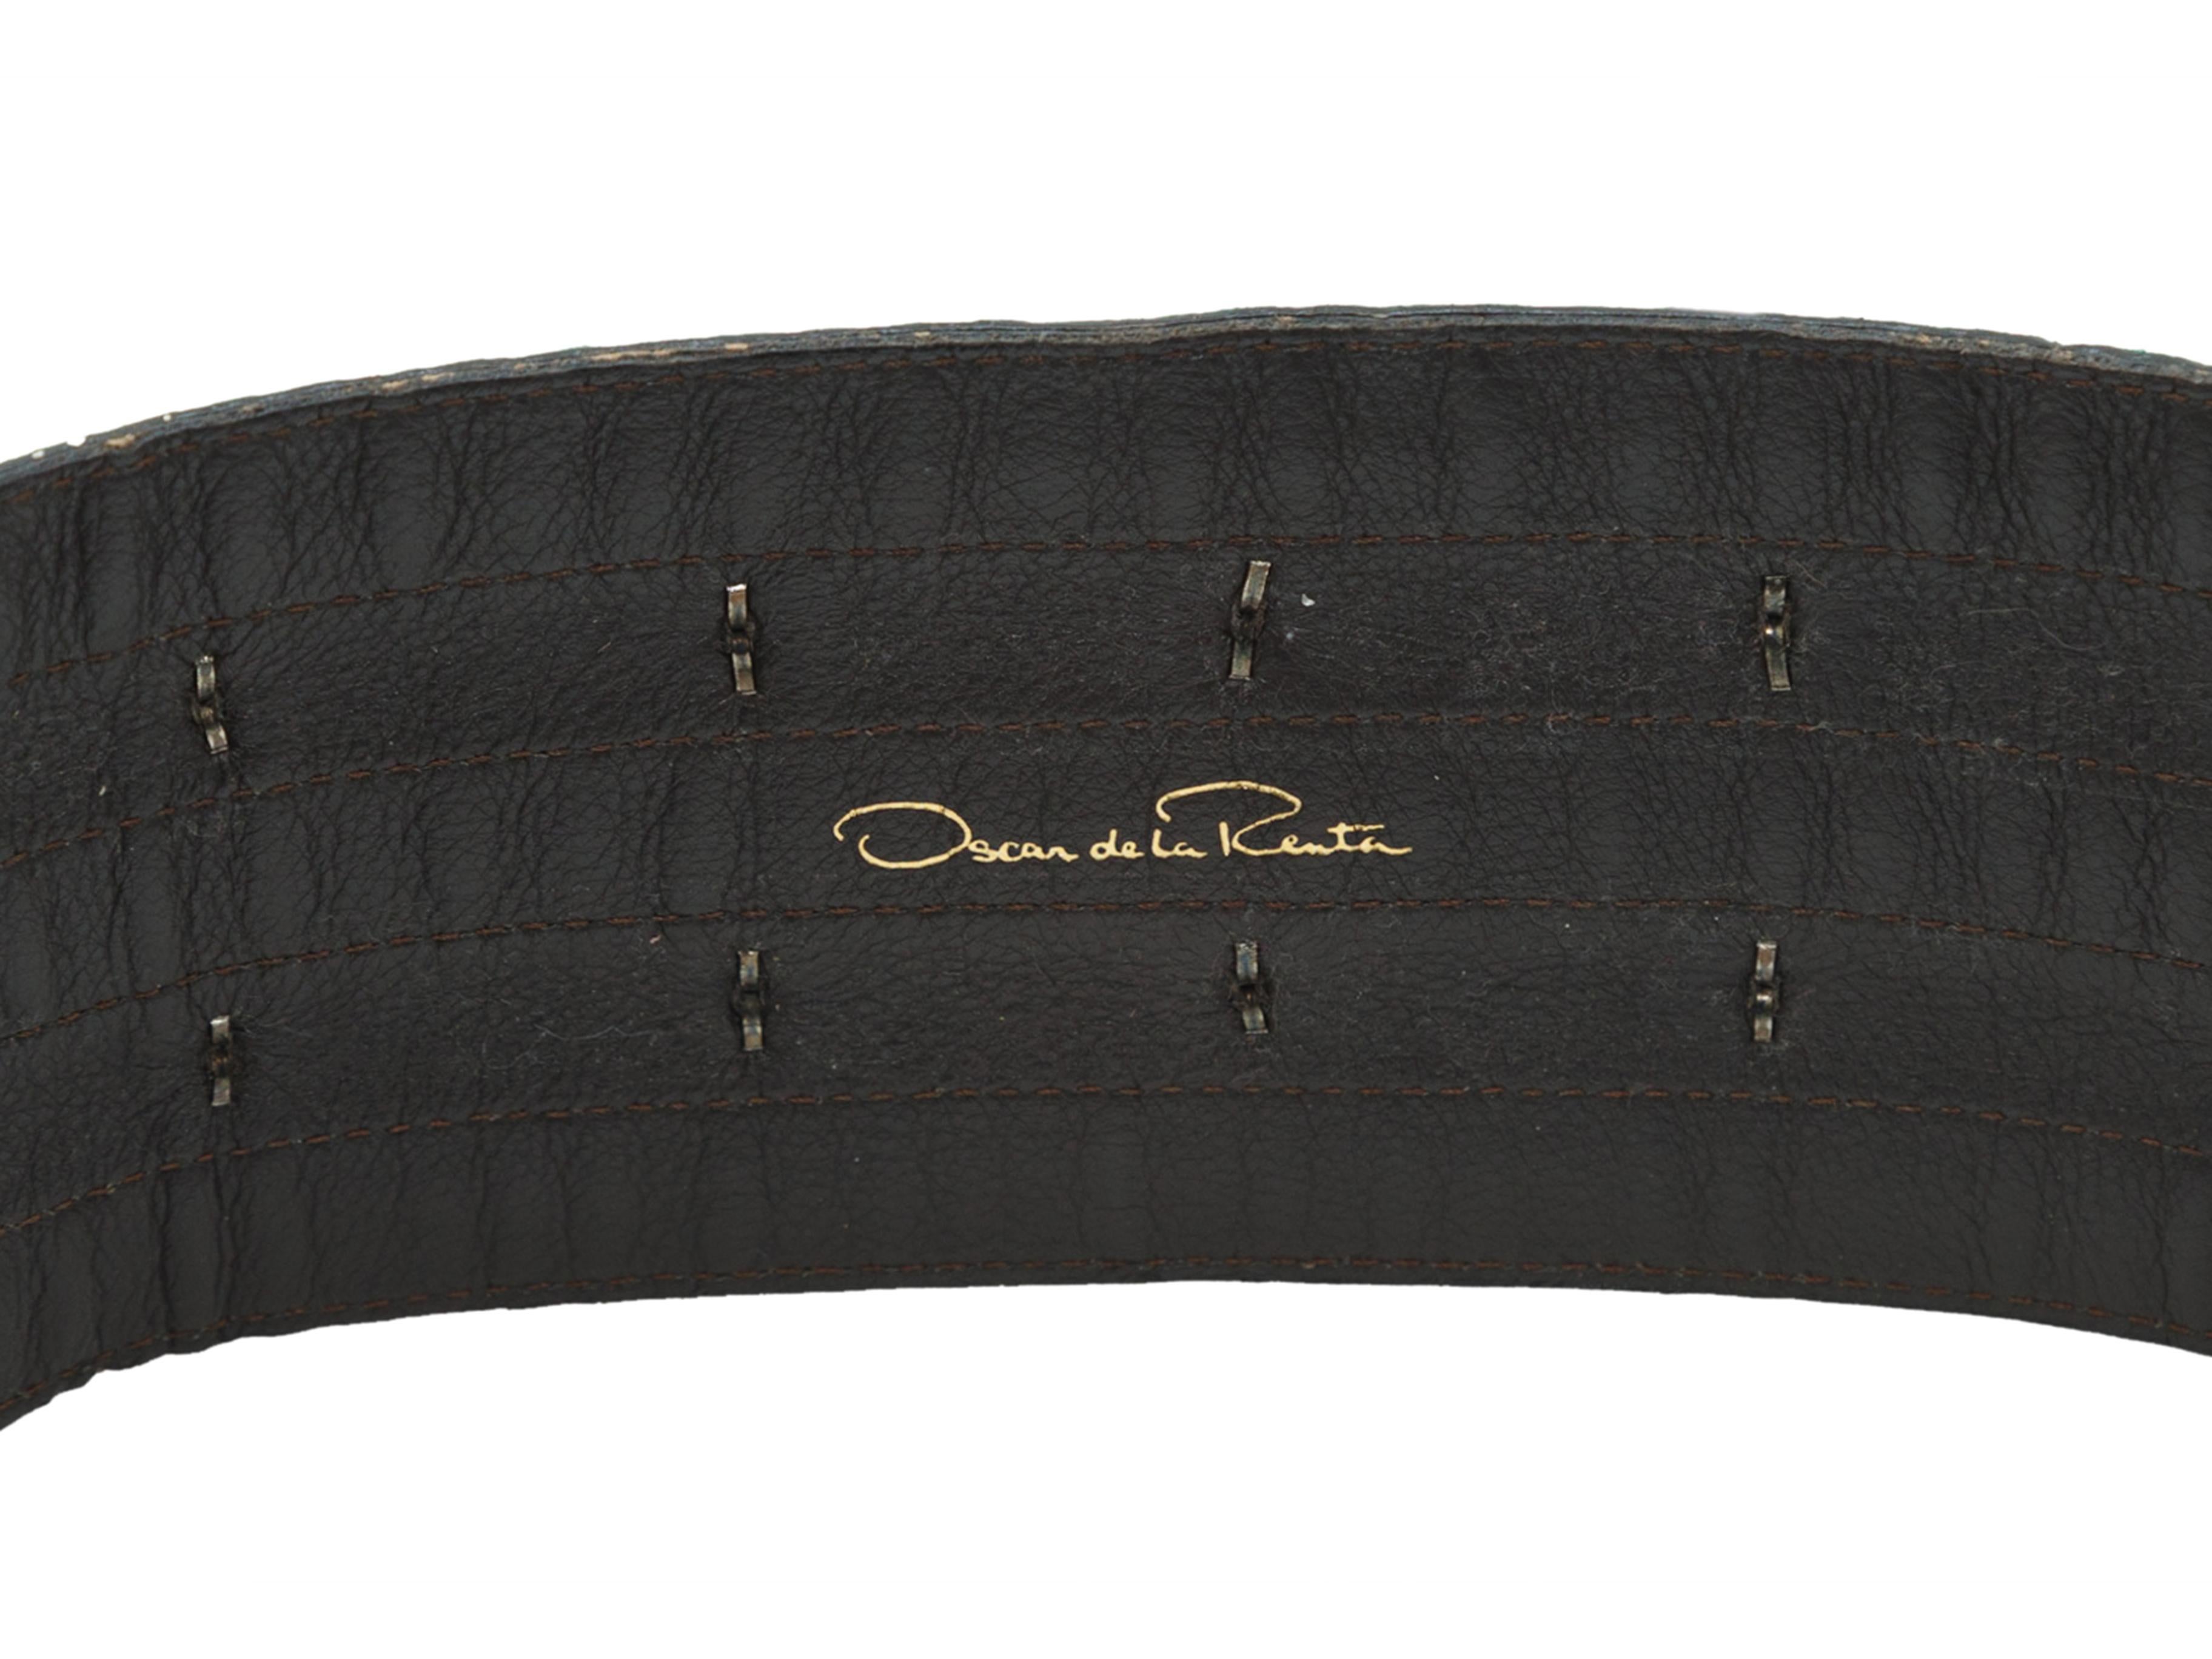 Product details: Green and black snakeskin belt by Oscar de la Renta. Gunmetal stud embellishments throughout. Triple buckle closure at front. 27